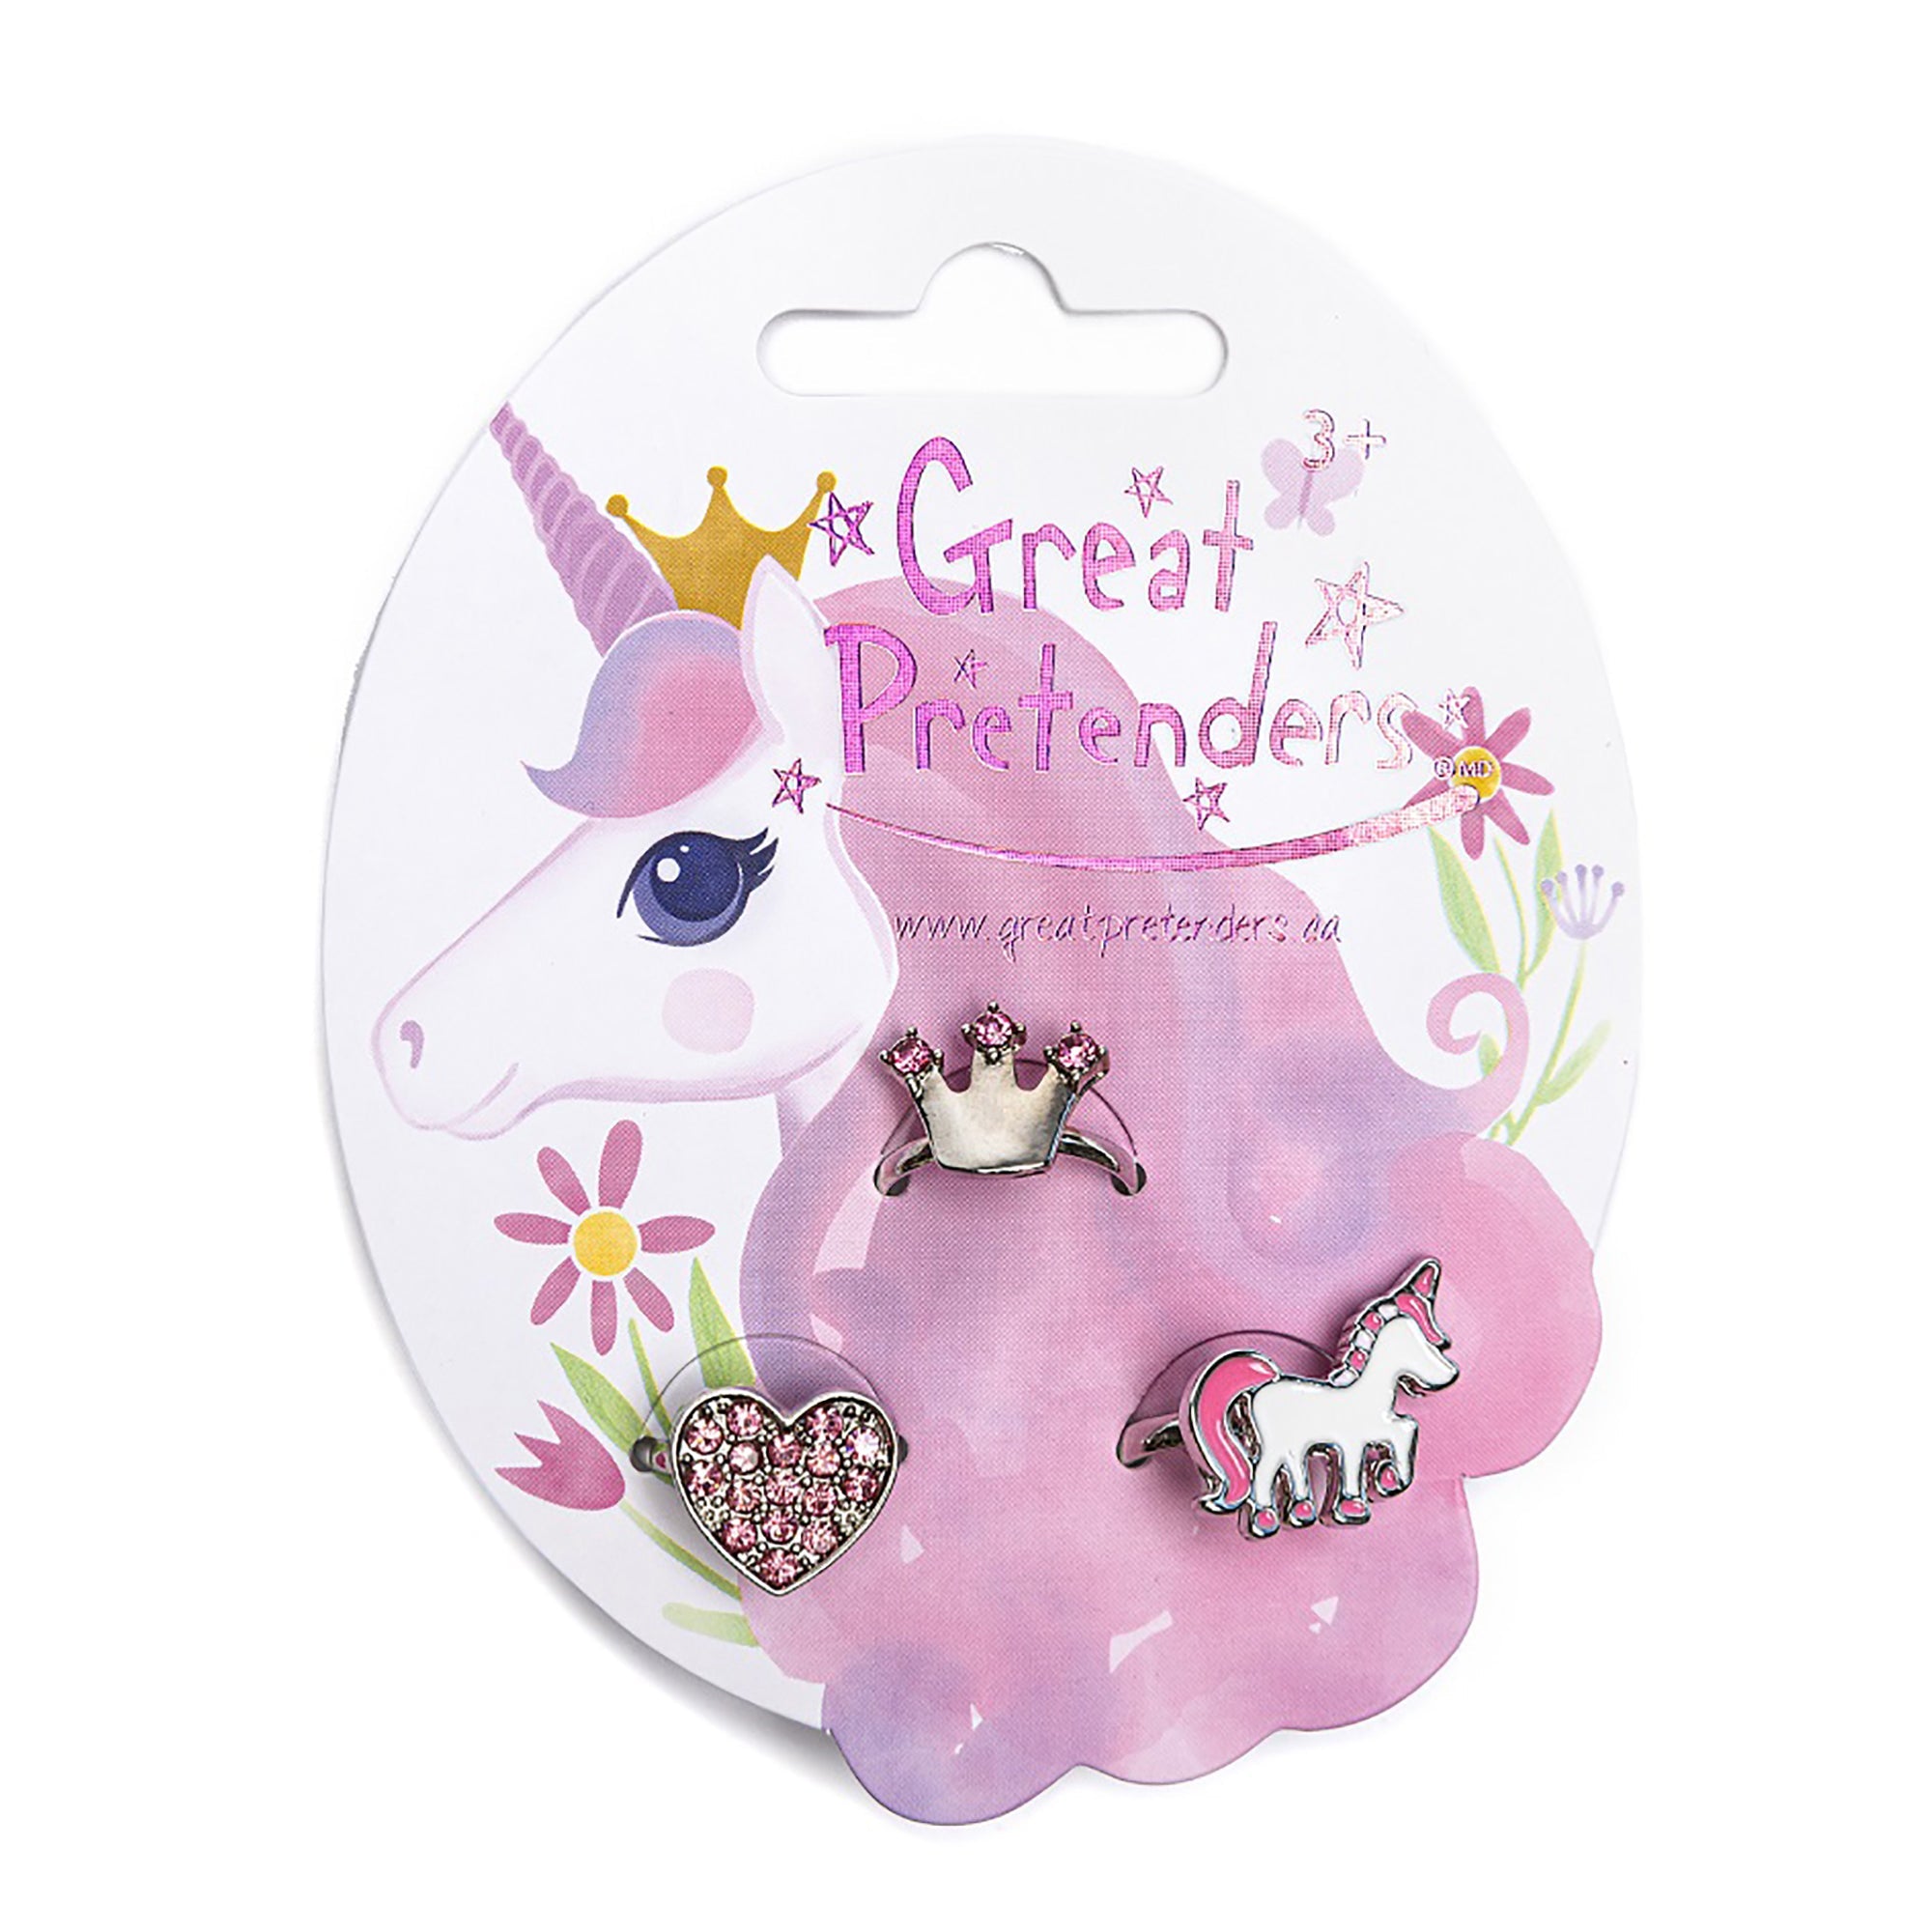 Kid's Jewelry 3pcs Princess Ring Set Crown, Unicorn, Heart